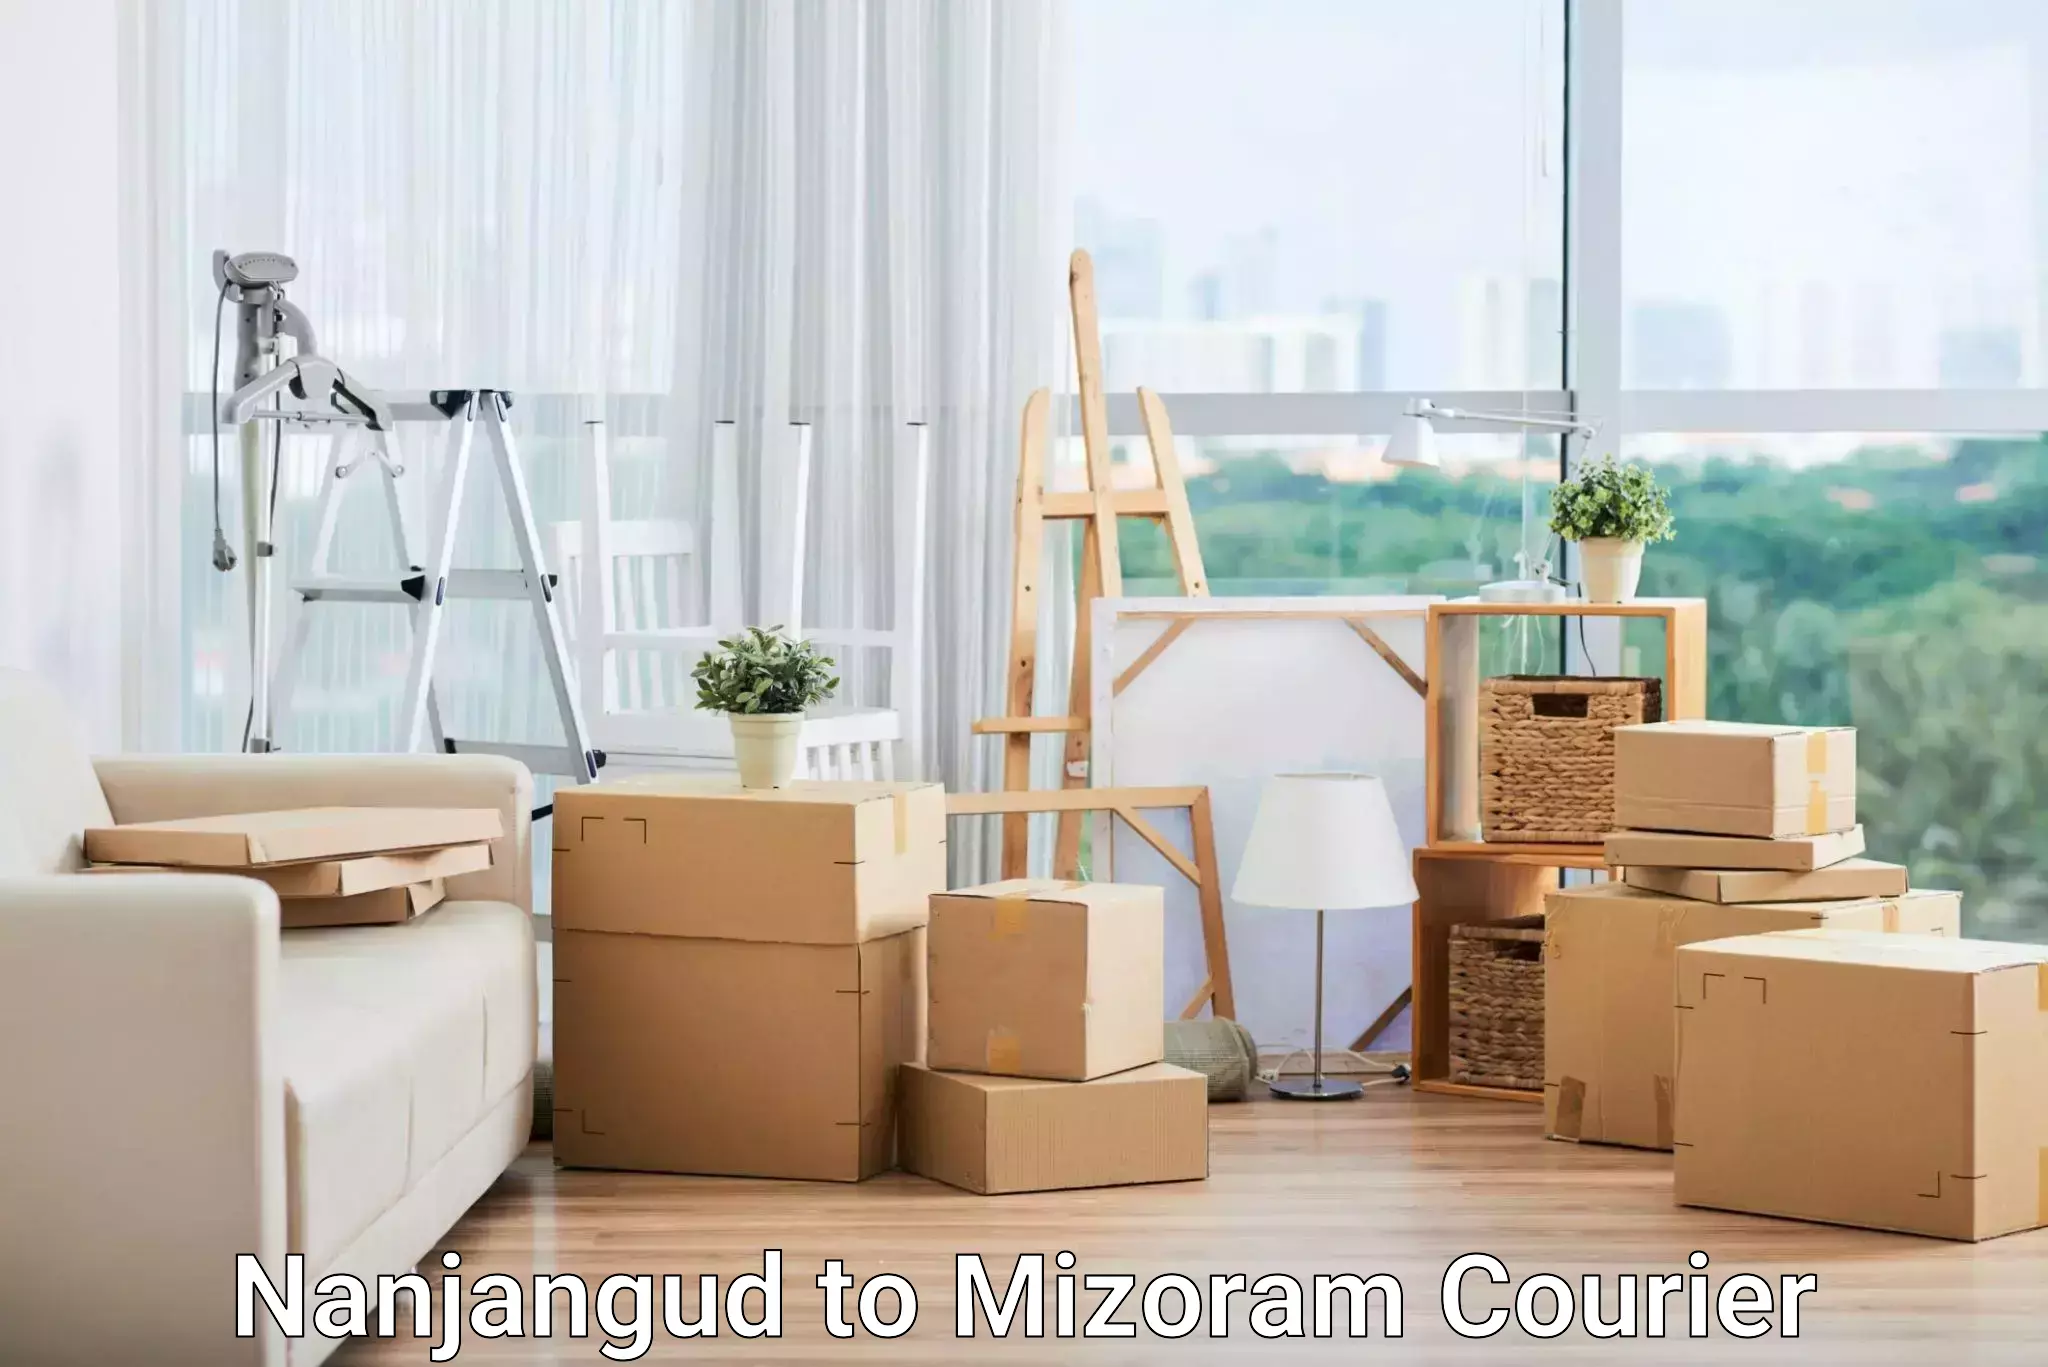 Courier service comparison Nanjangud to Mizoram